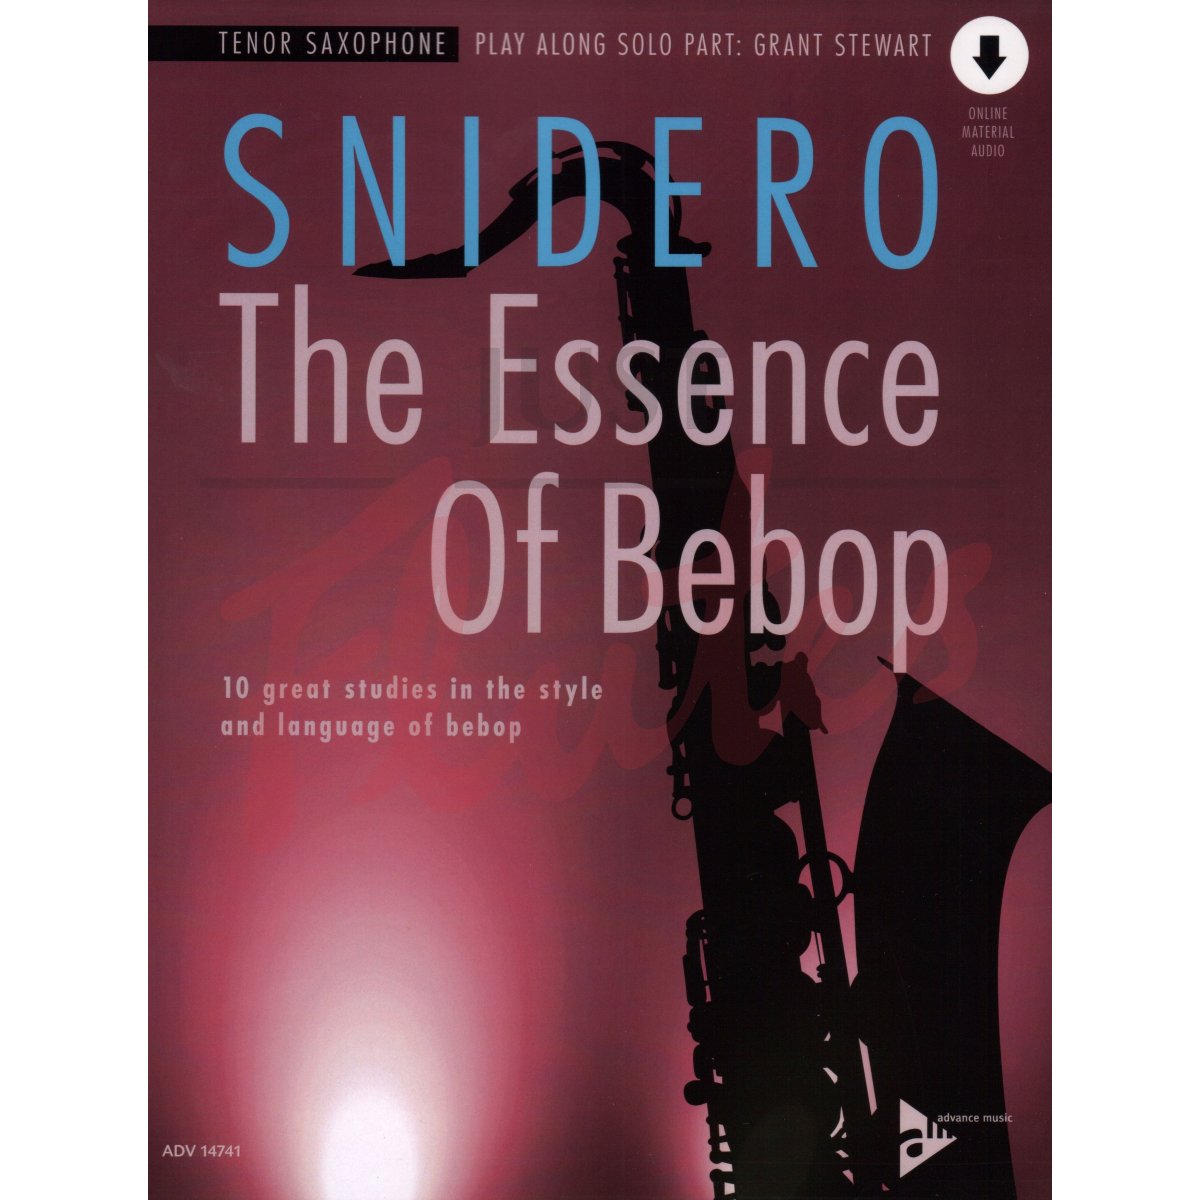 The Essence of Bebop [Tenor Saxophone]